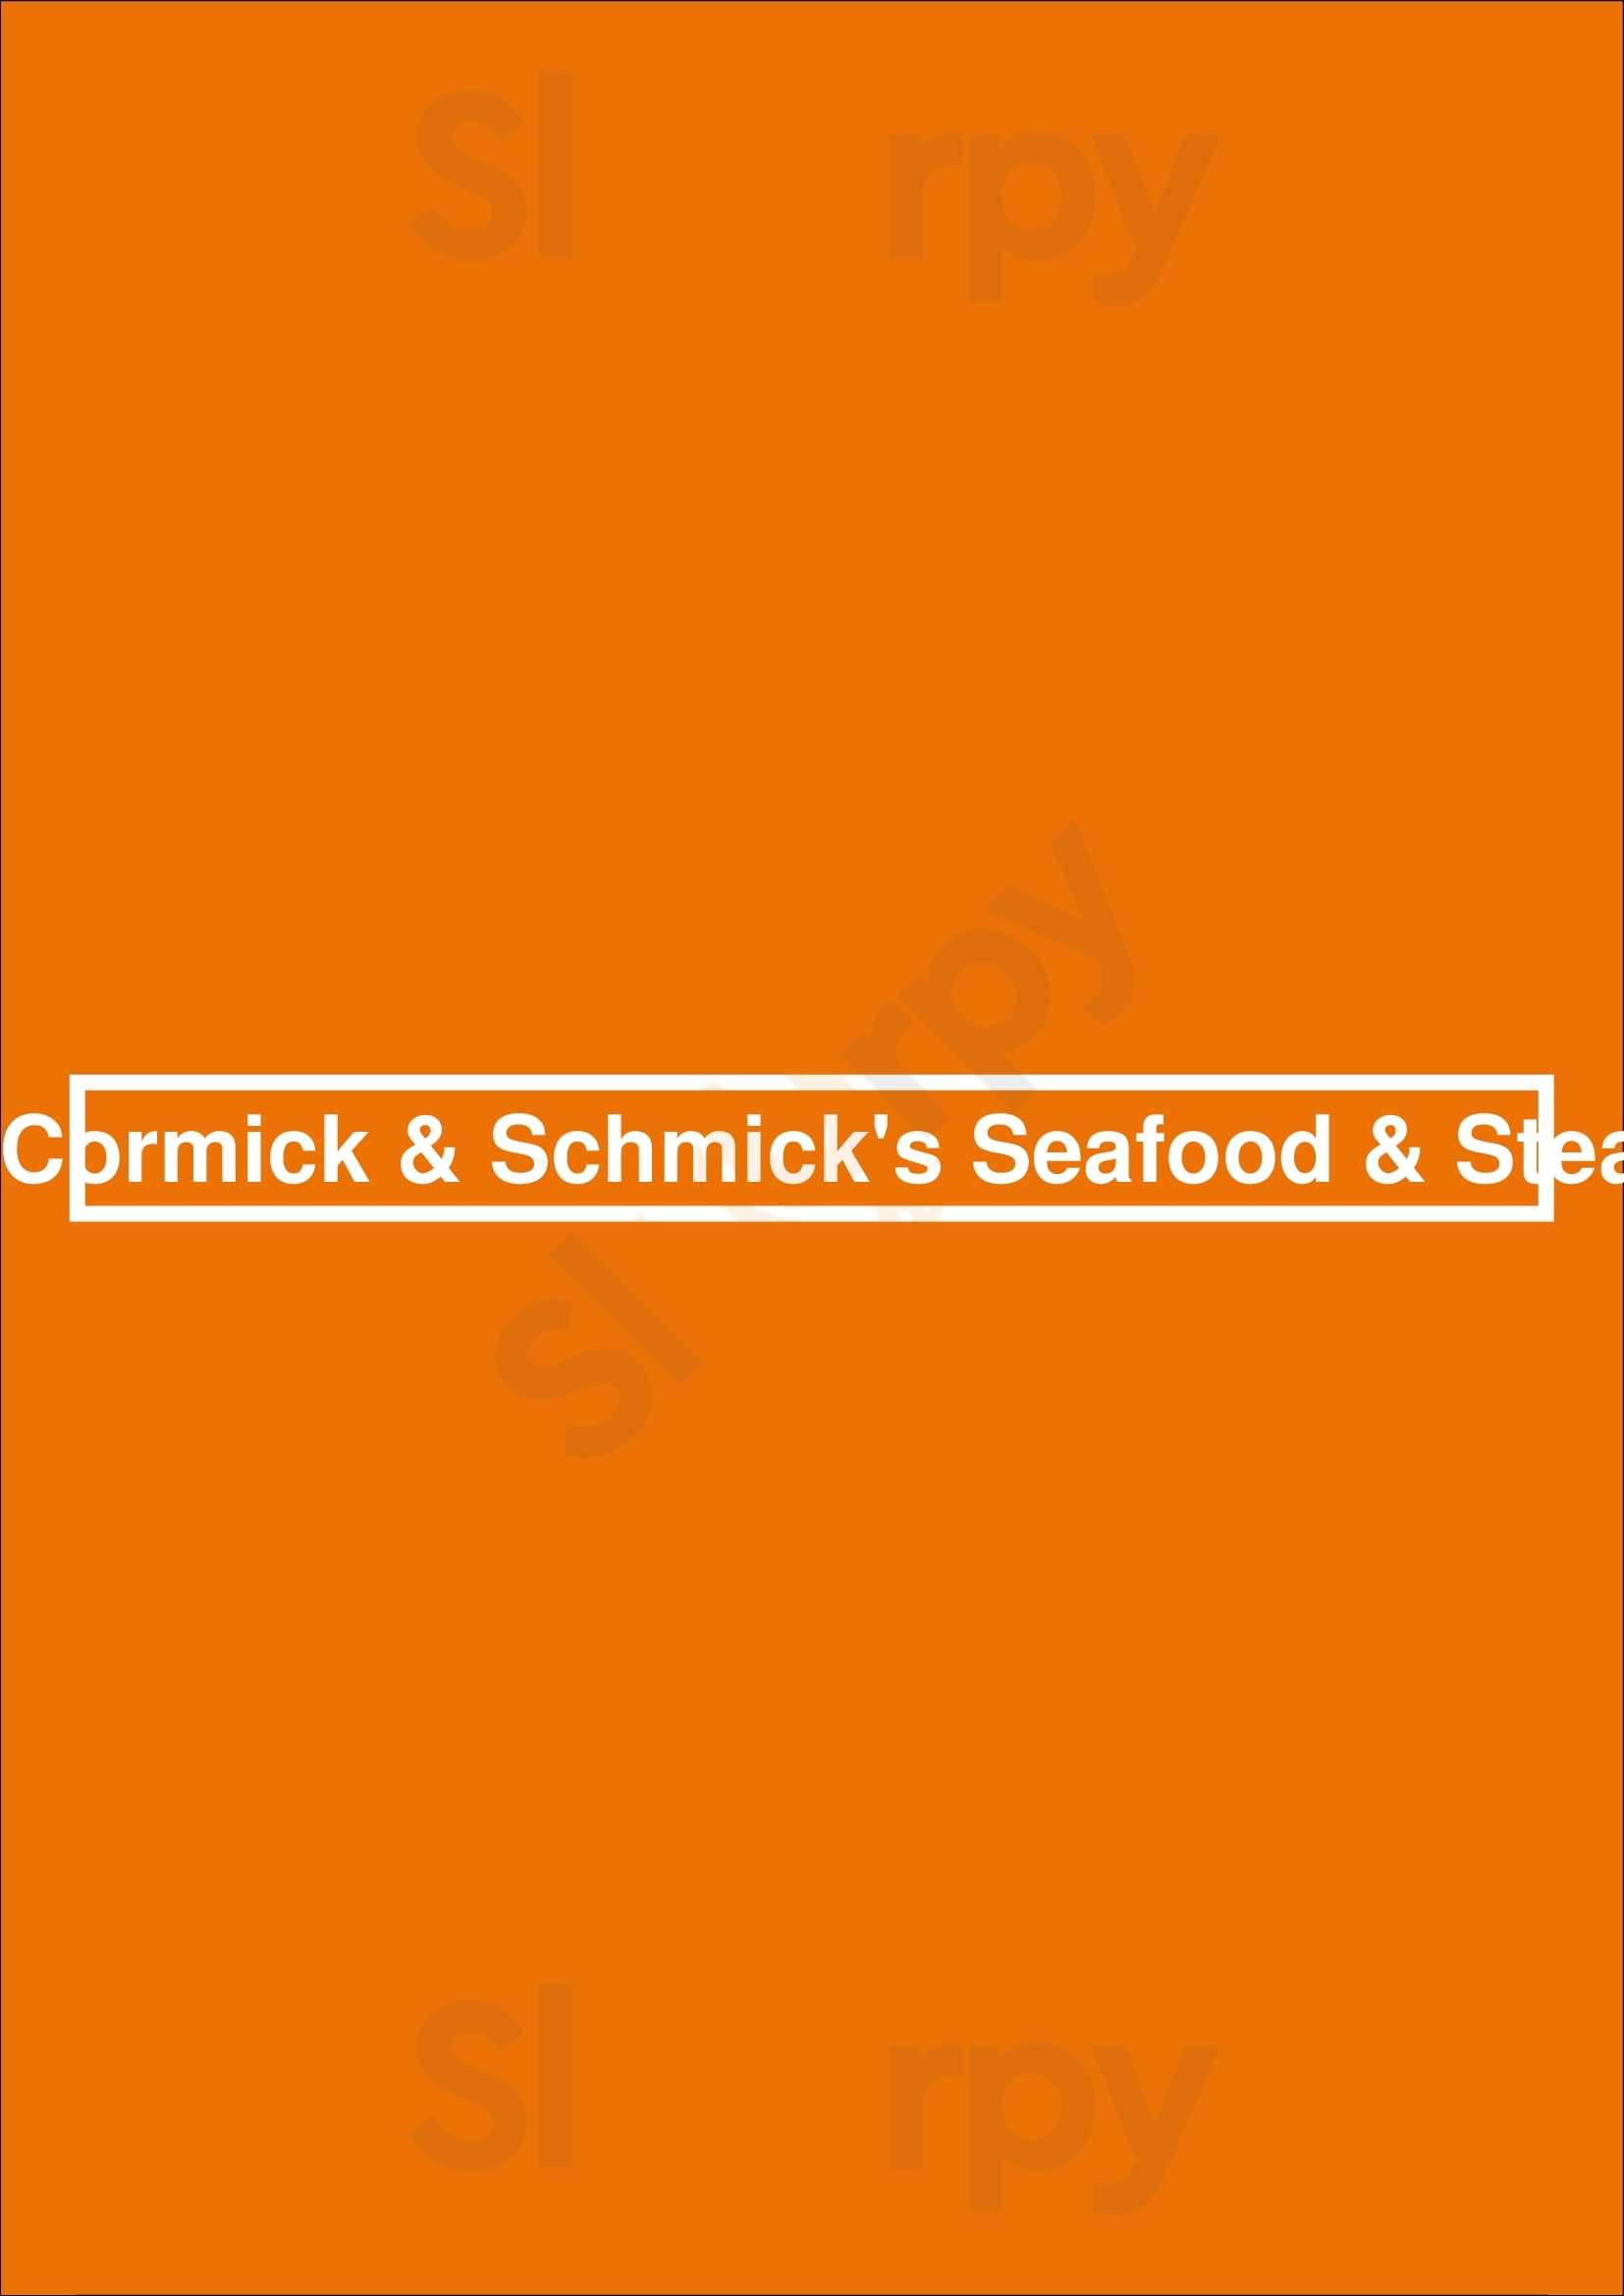 Mccormick & Schmick's Seafood & Steaks Houston Menu - 1